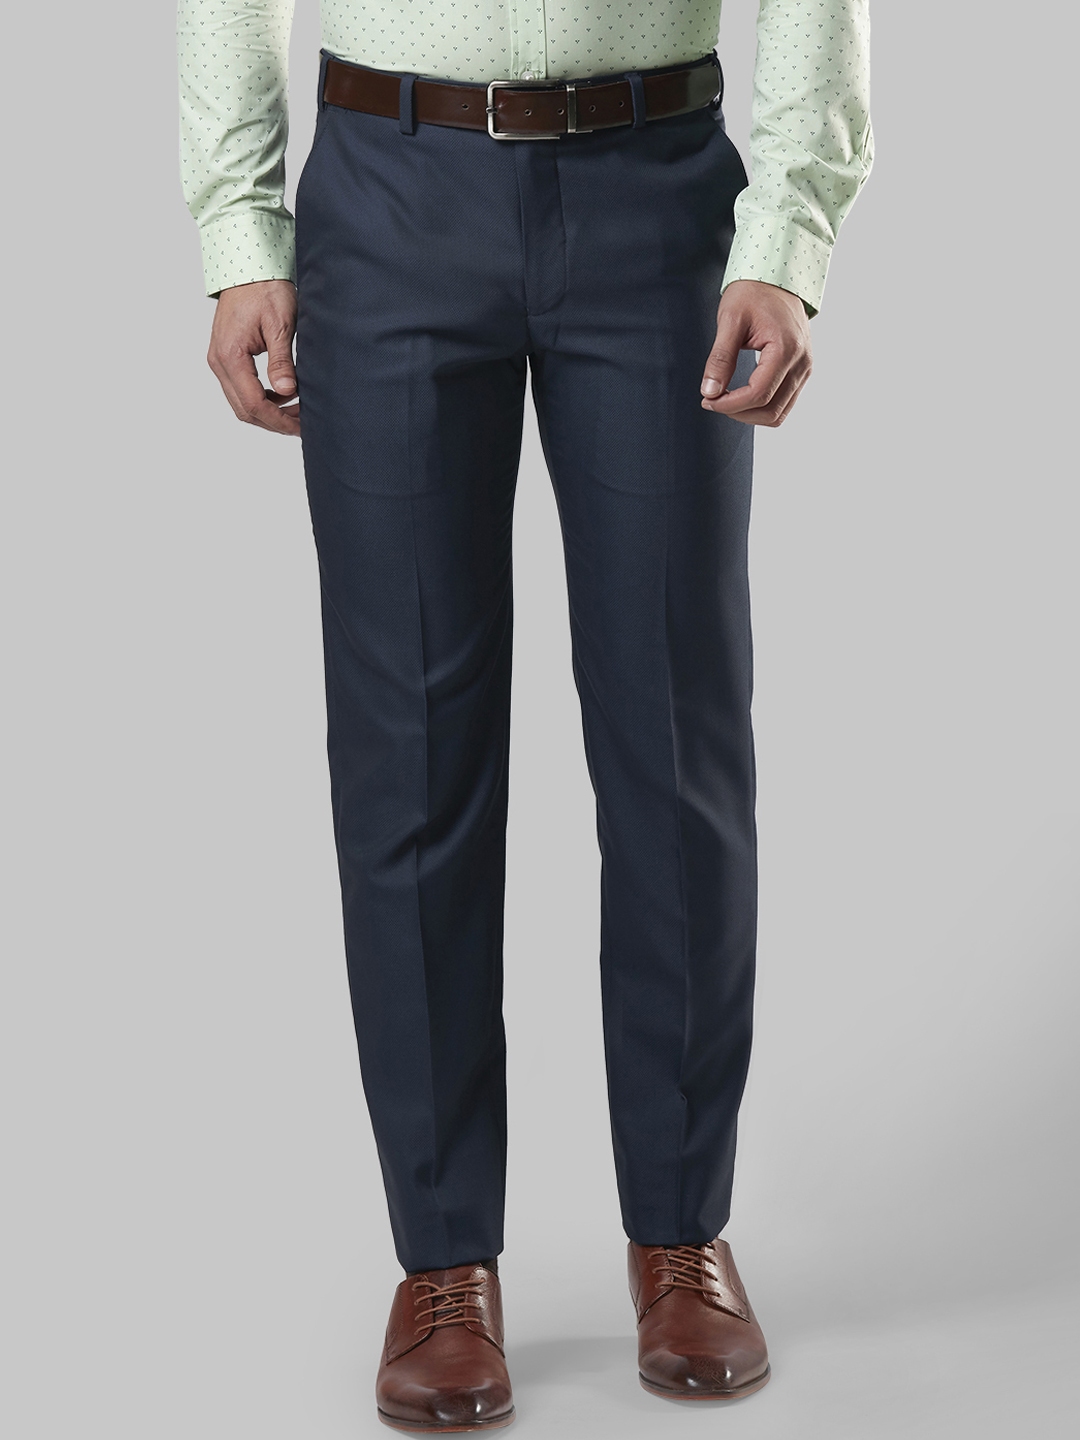 Buy Next Look Men Navy Blue Slim Fit Solid Formal Trousers - Trousers ...